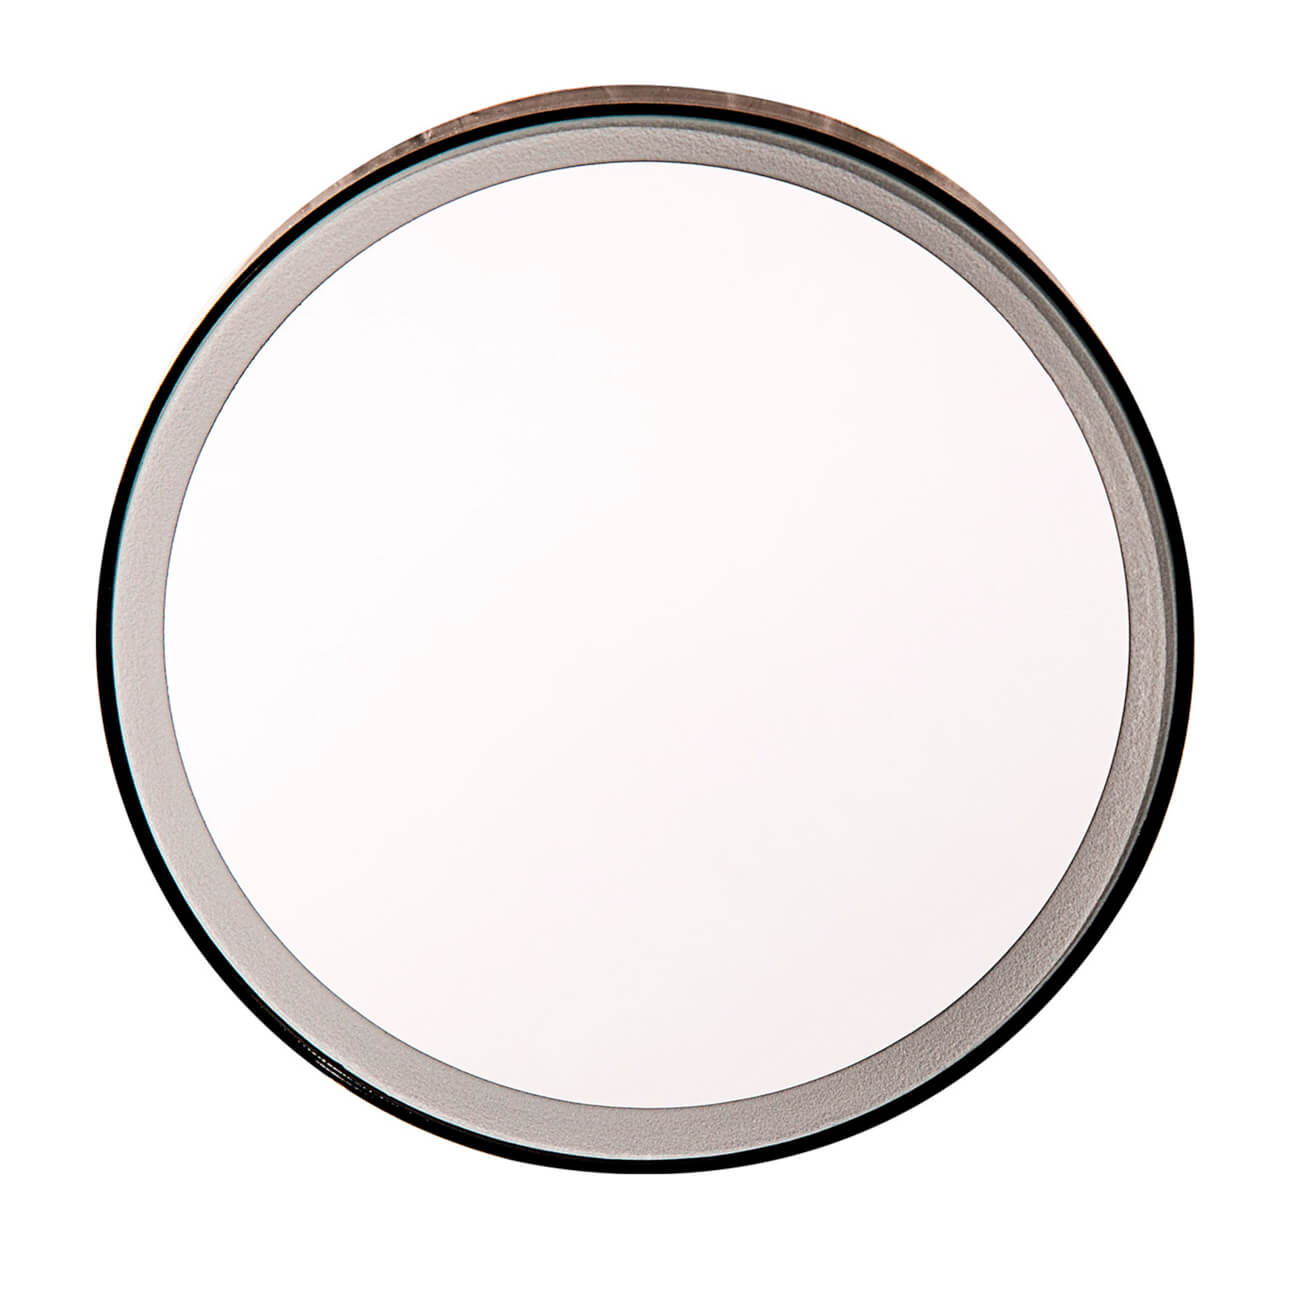 Hanging mirror, 10 cm, magnifying, illuminated, suction cup, plastic, Black, Mirror изображение № 1